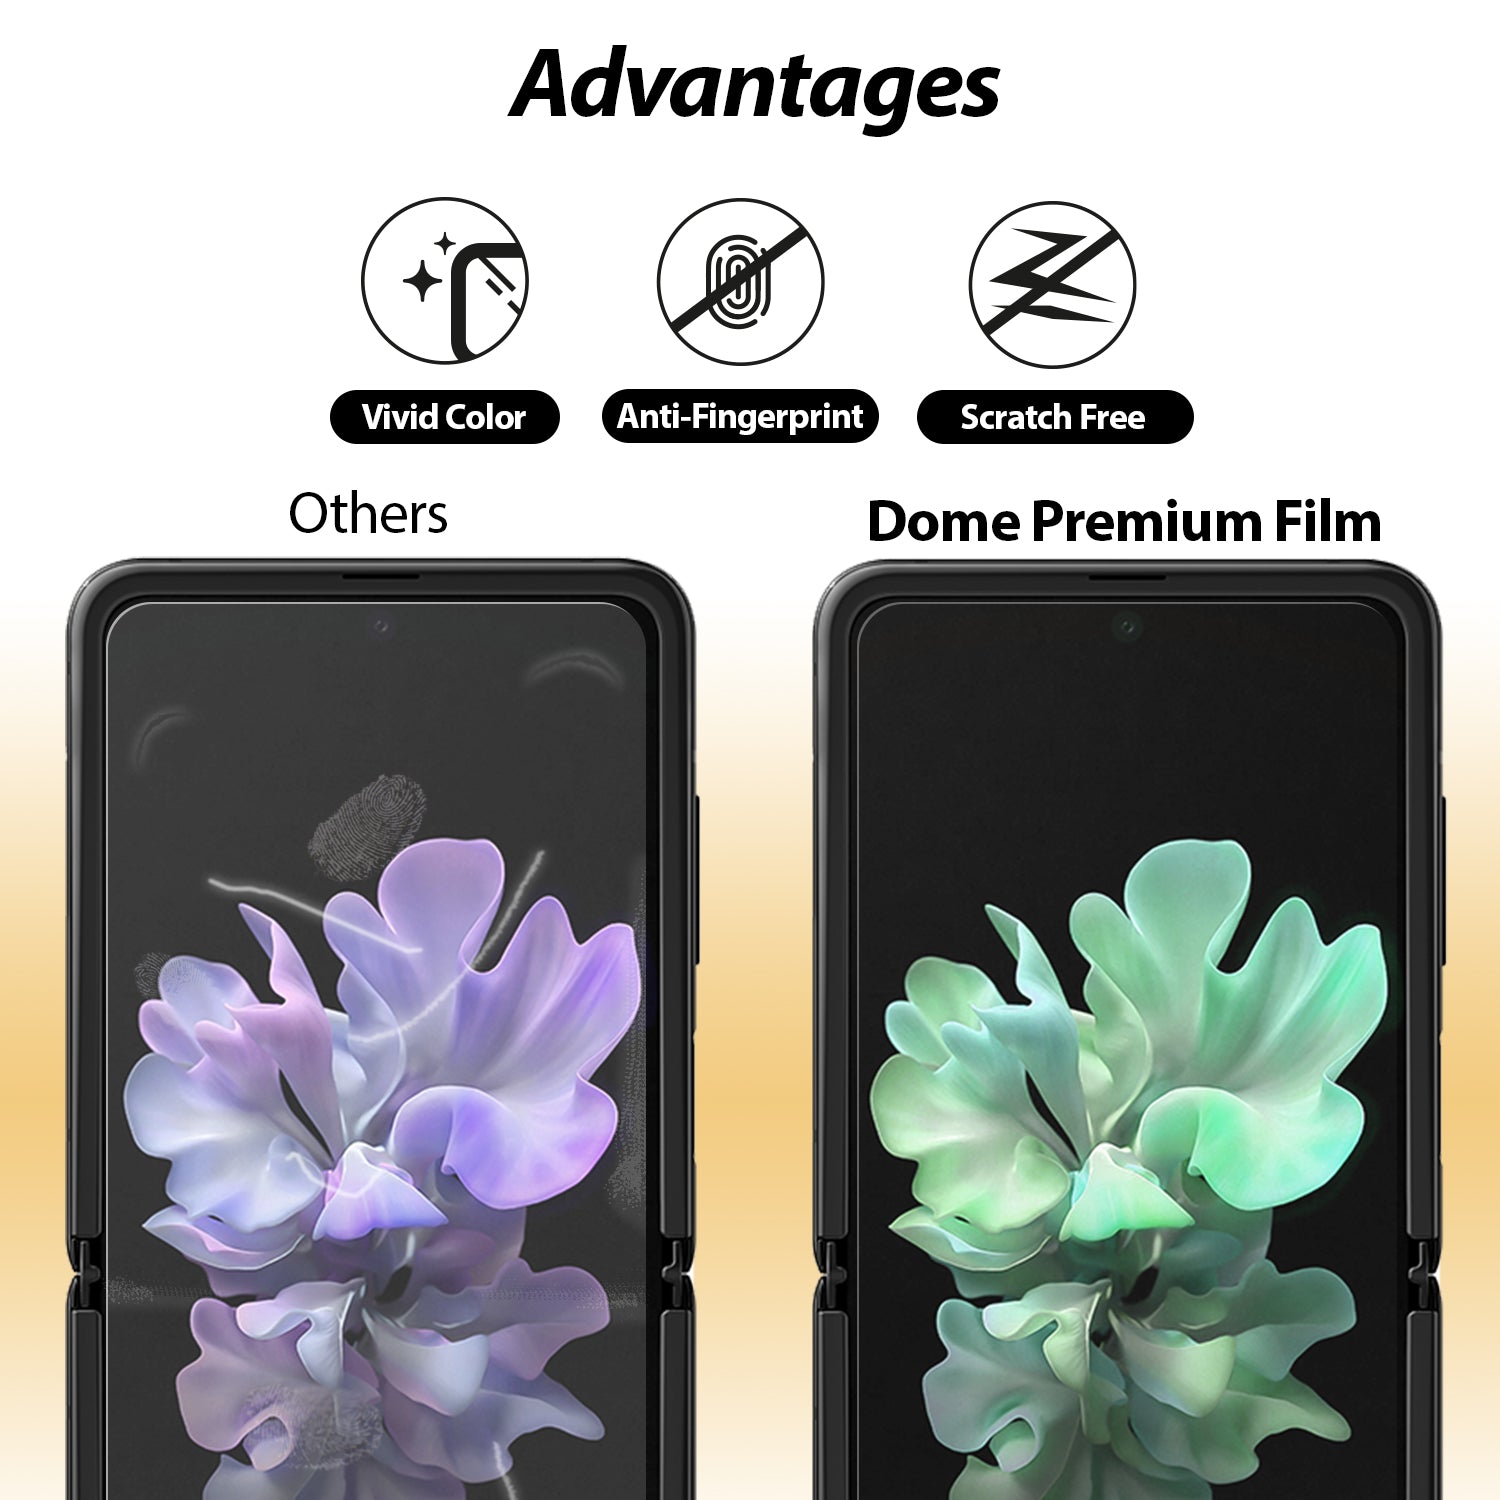 [Dome Case] Samsung Galaxy Z Flip 3 Clear Case